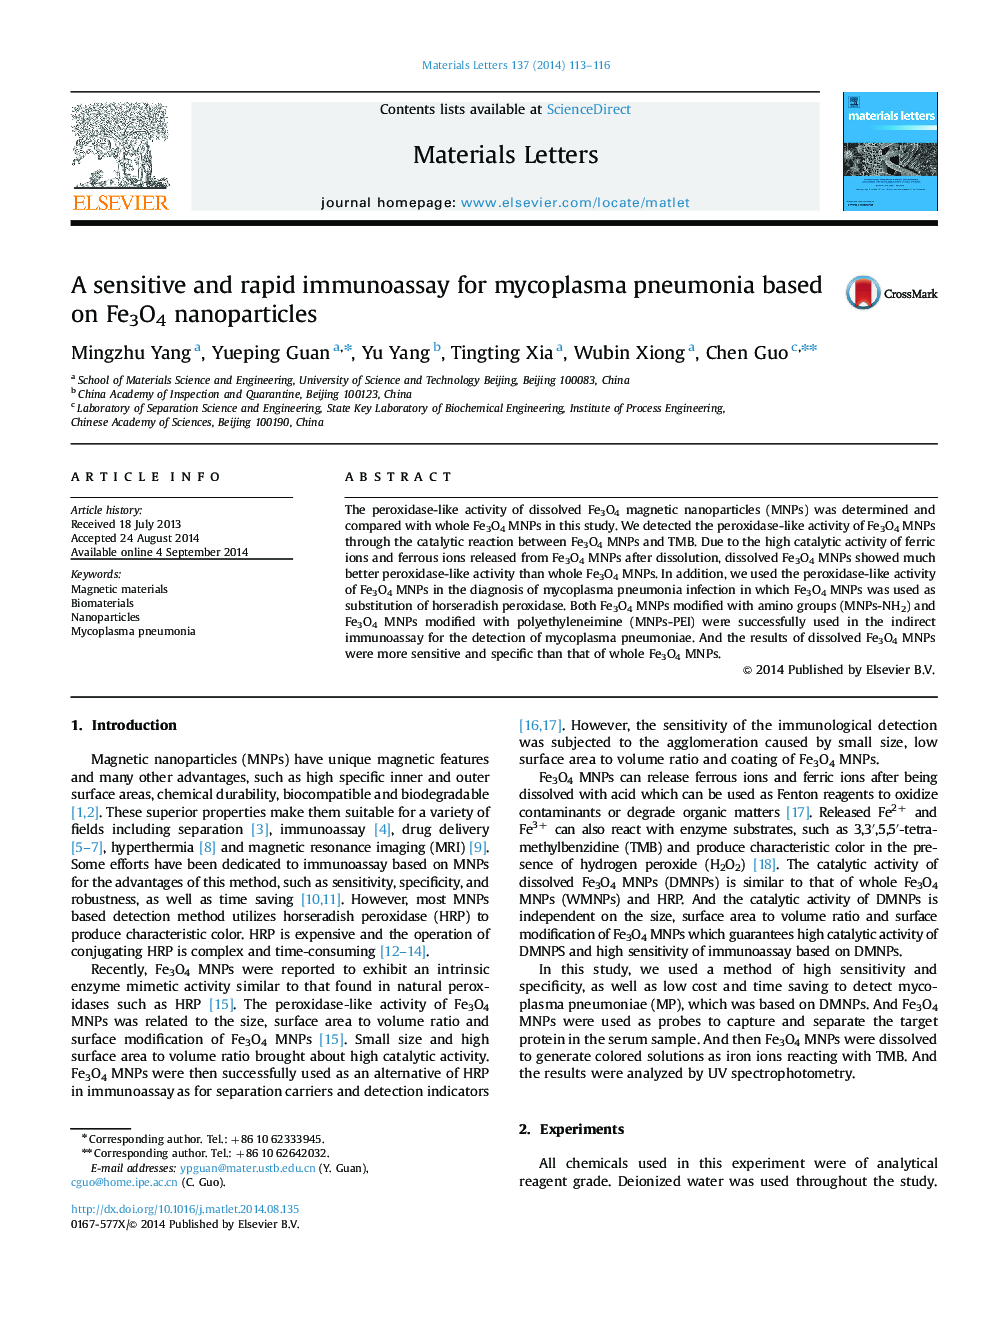 A sensitive and rapid immunoassay for mycoplasma pneumonia based on Fe3O4 nanoparticles